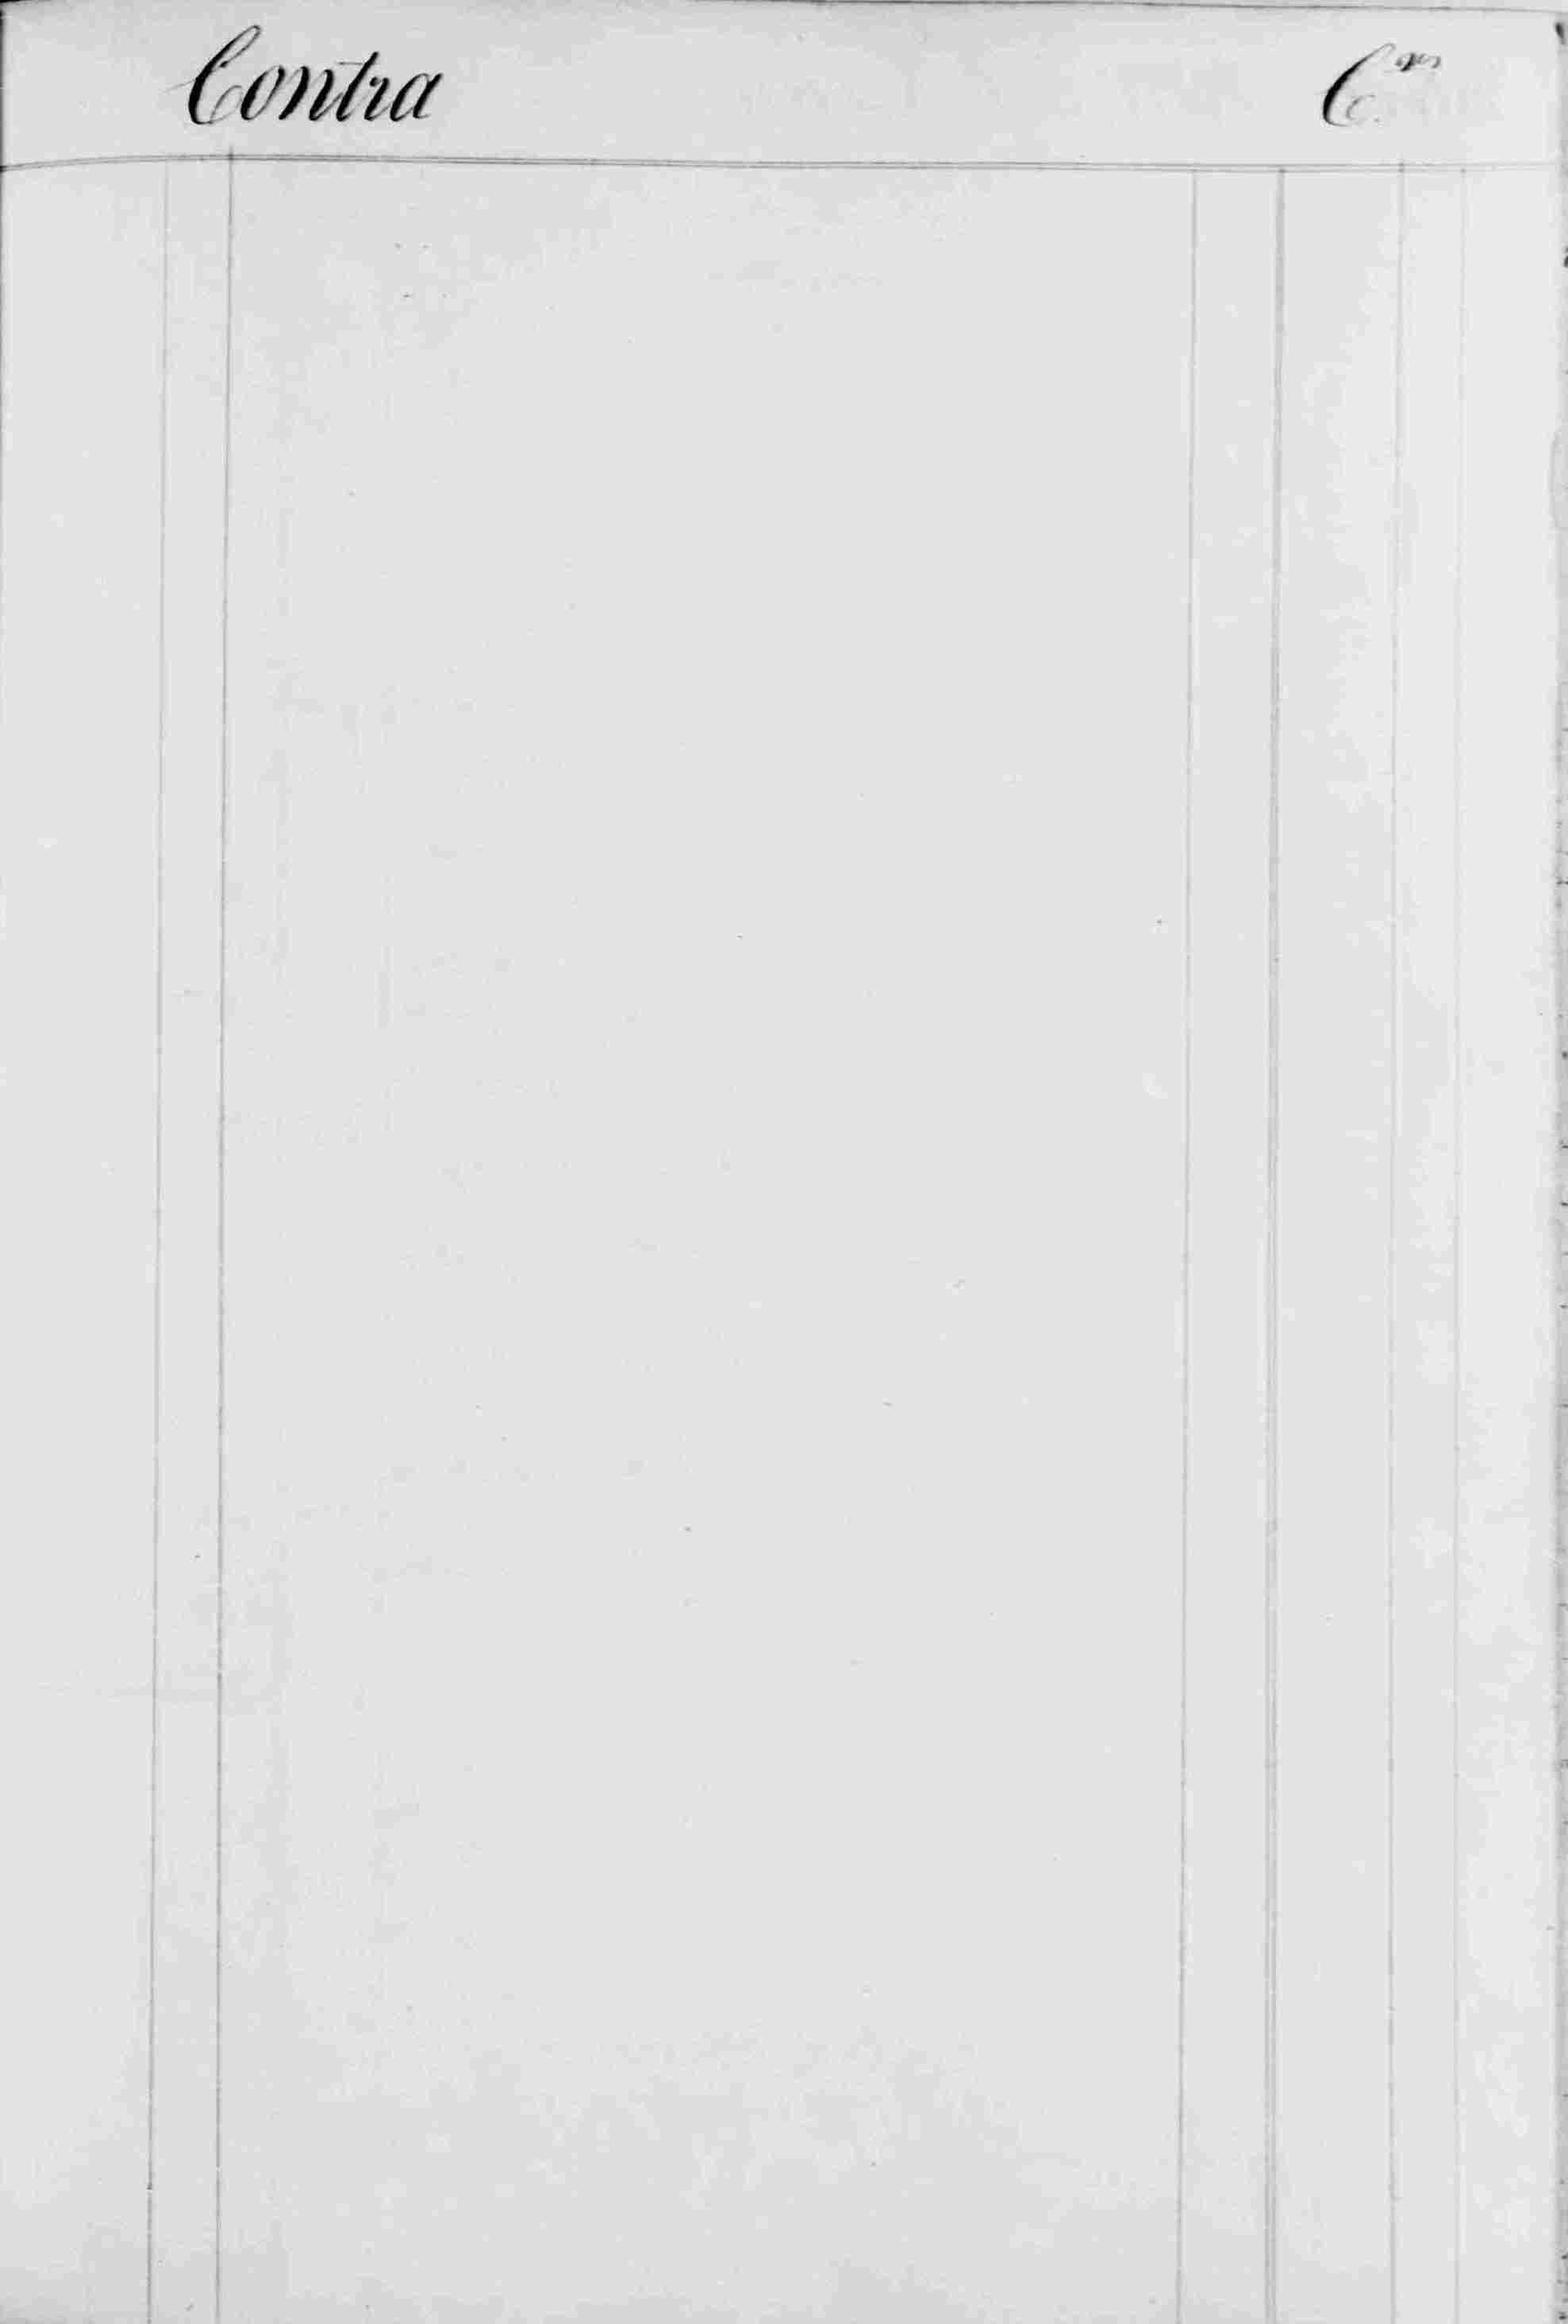  Ledger B, folio 298, right side